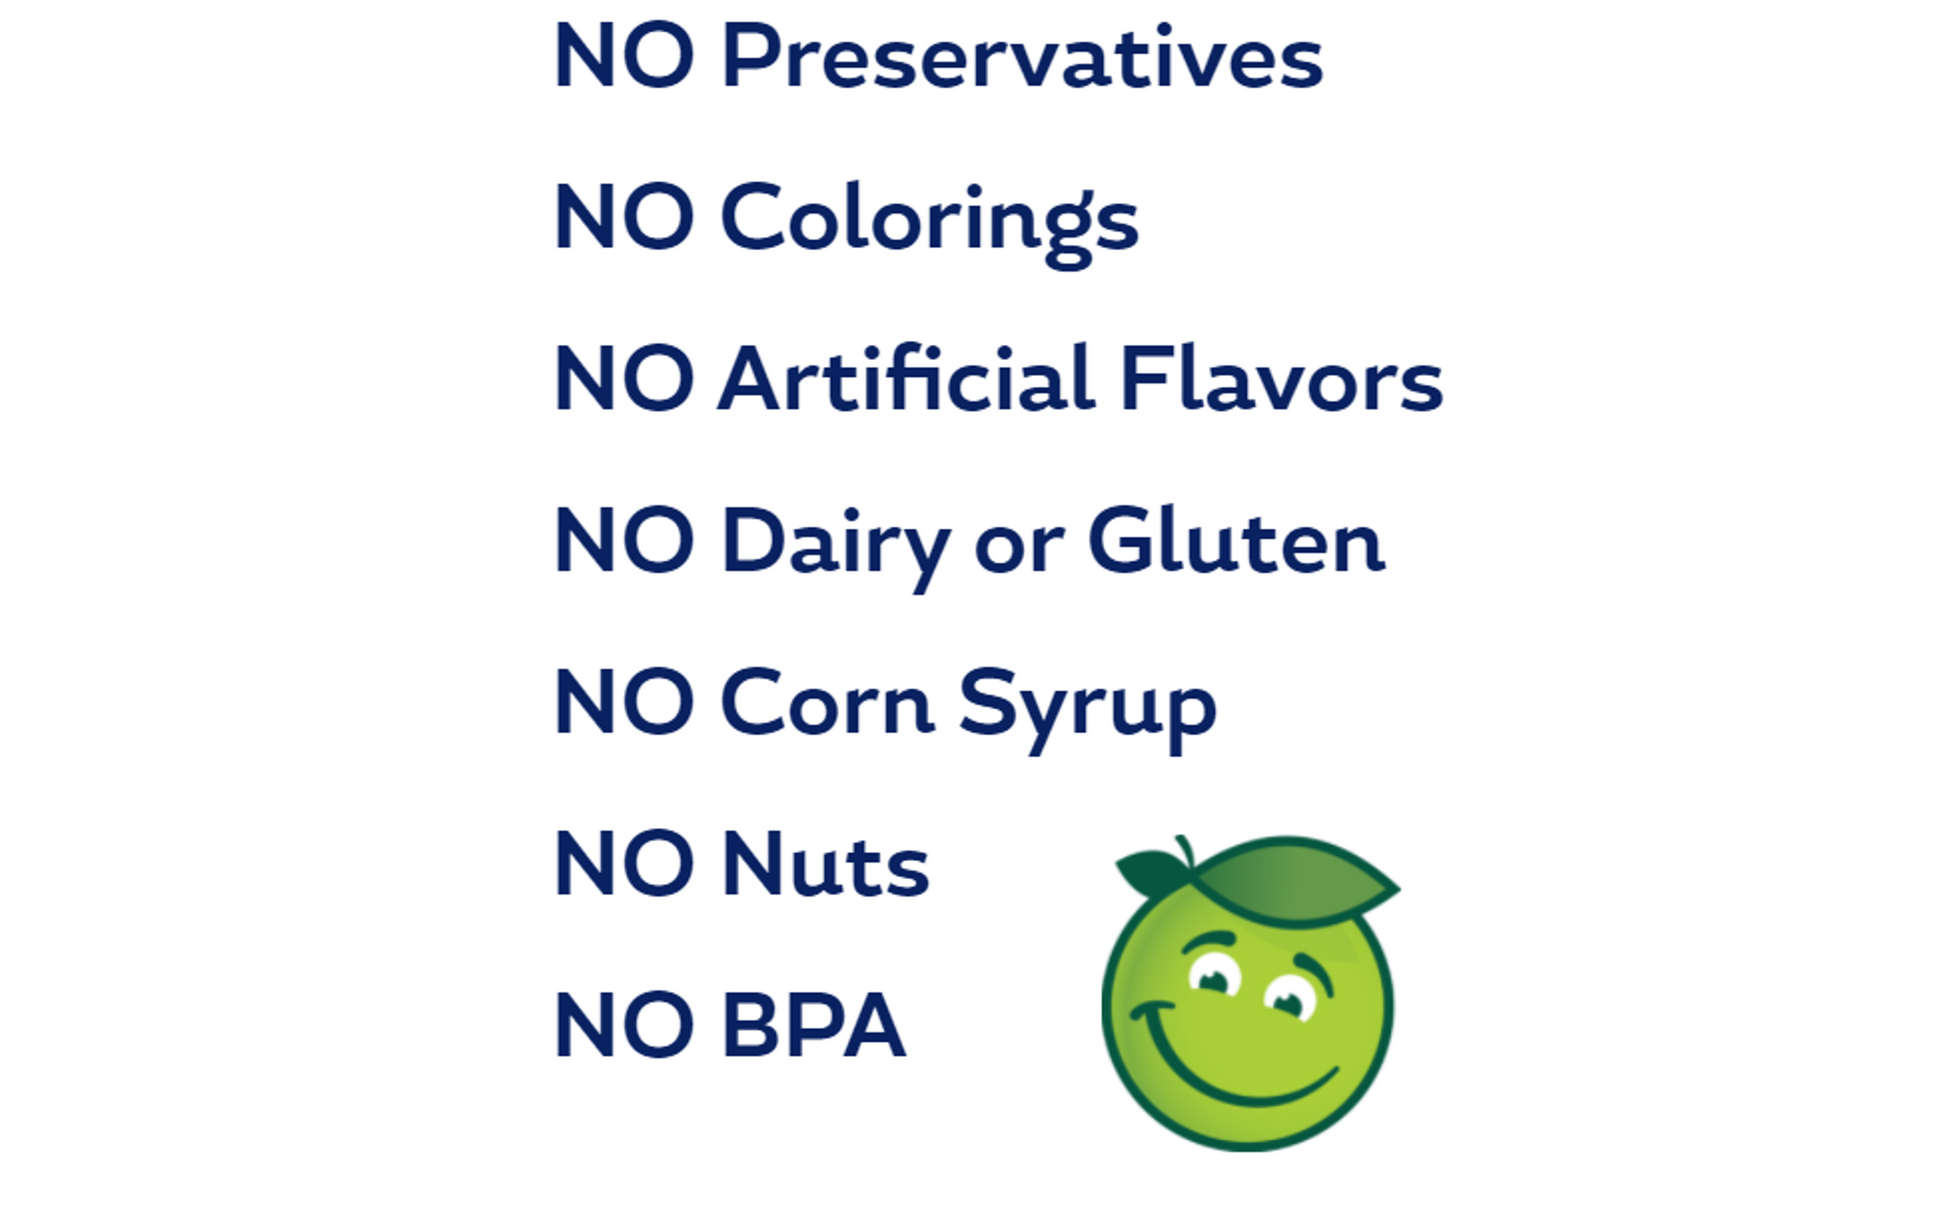 Buddy Fruits Mango, Banana & Passionfruit fruit pouch has no preservatives, no colorings, no artificial flavors, no dairy, no gluten, no corn syrup, no nuts, & no BPA.